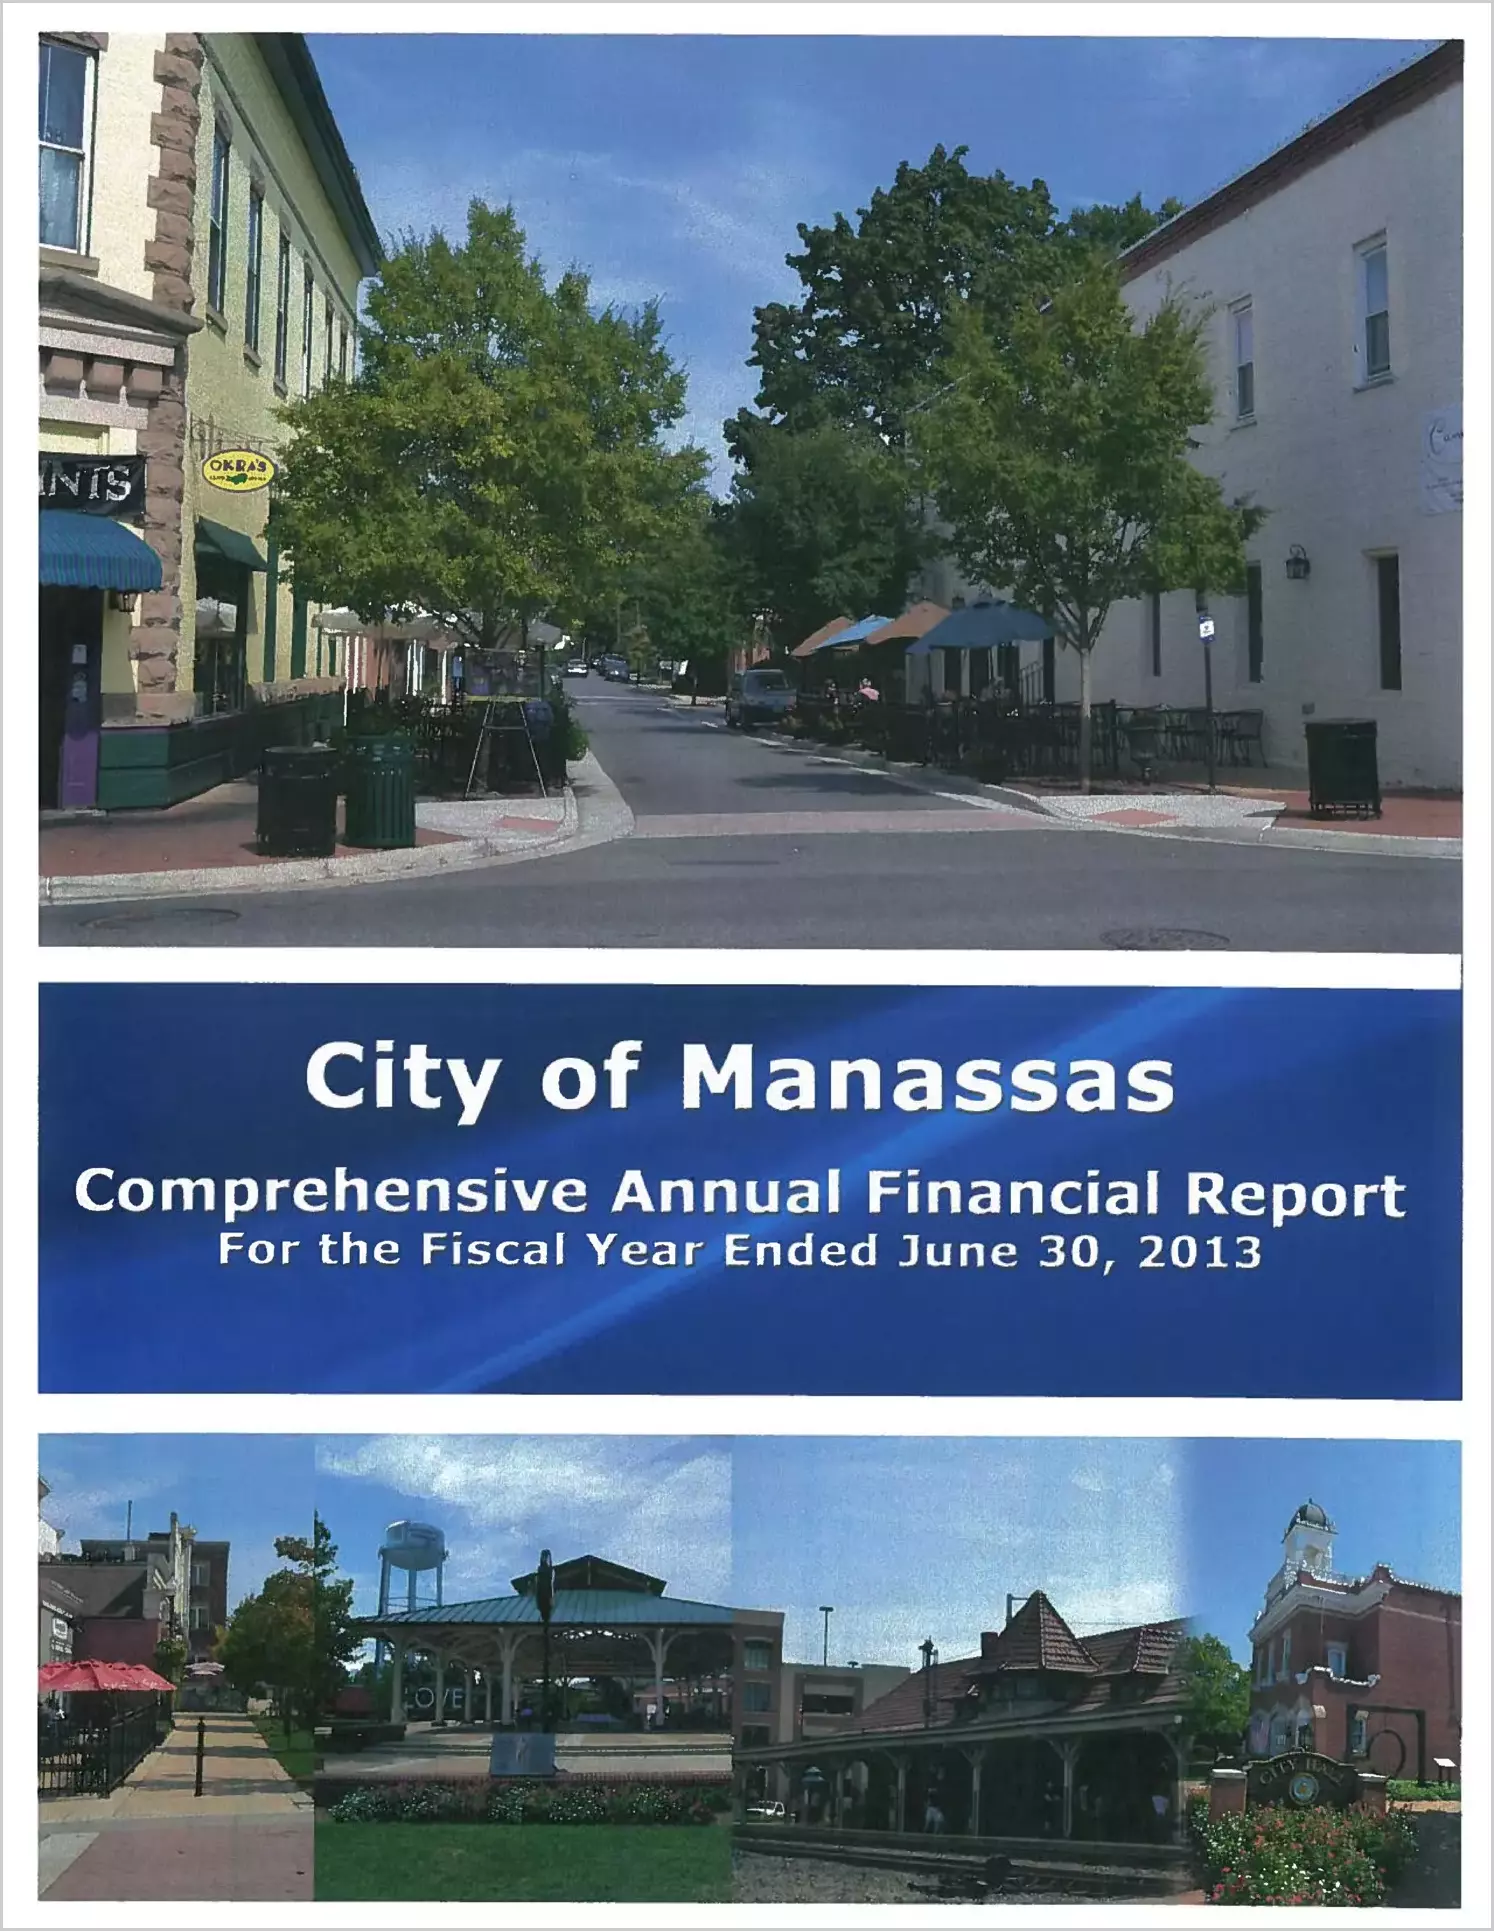 2013 Annual Financial Report for City of Manassas